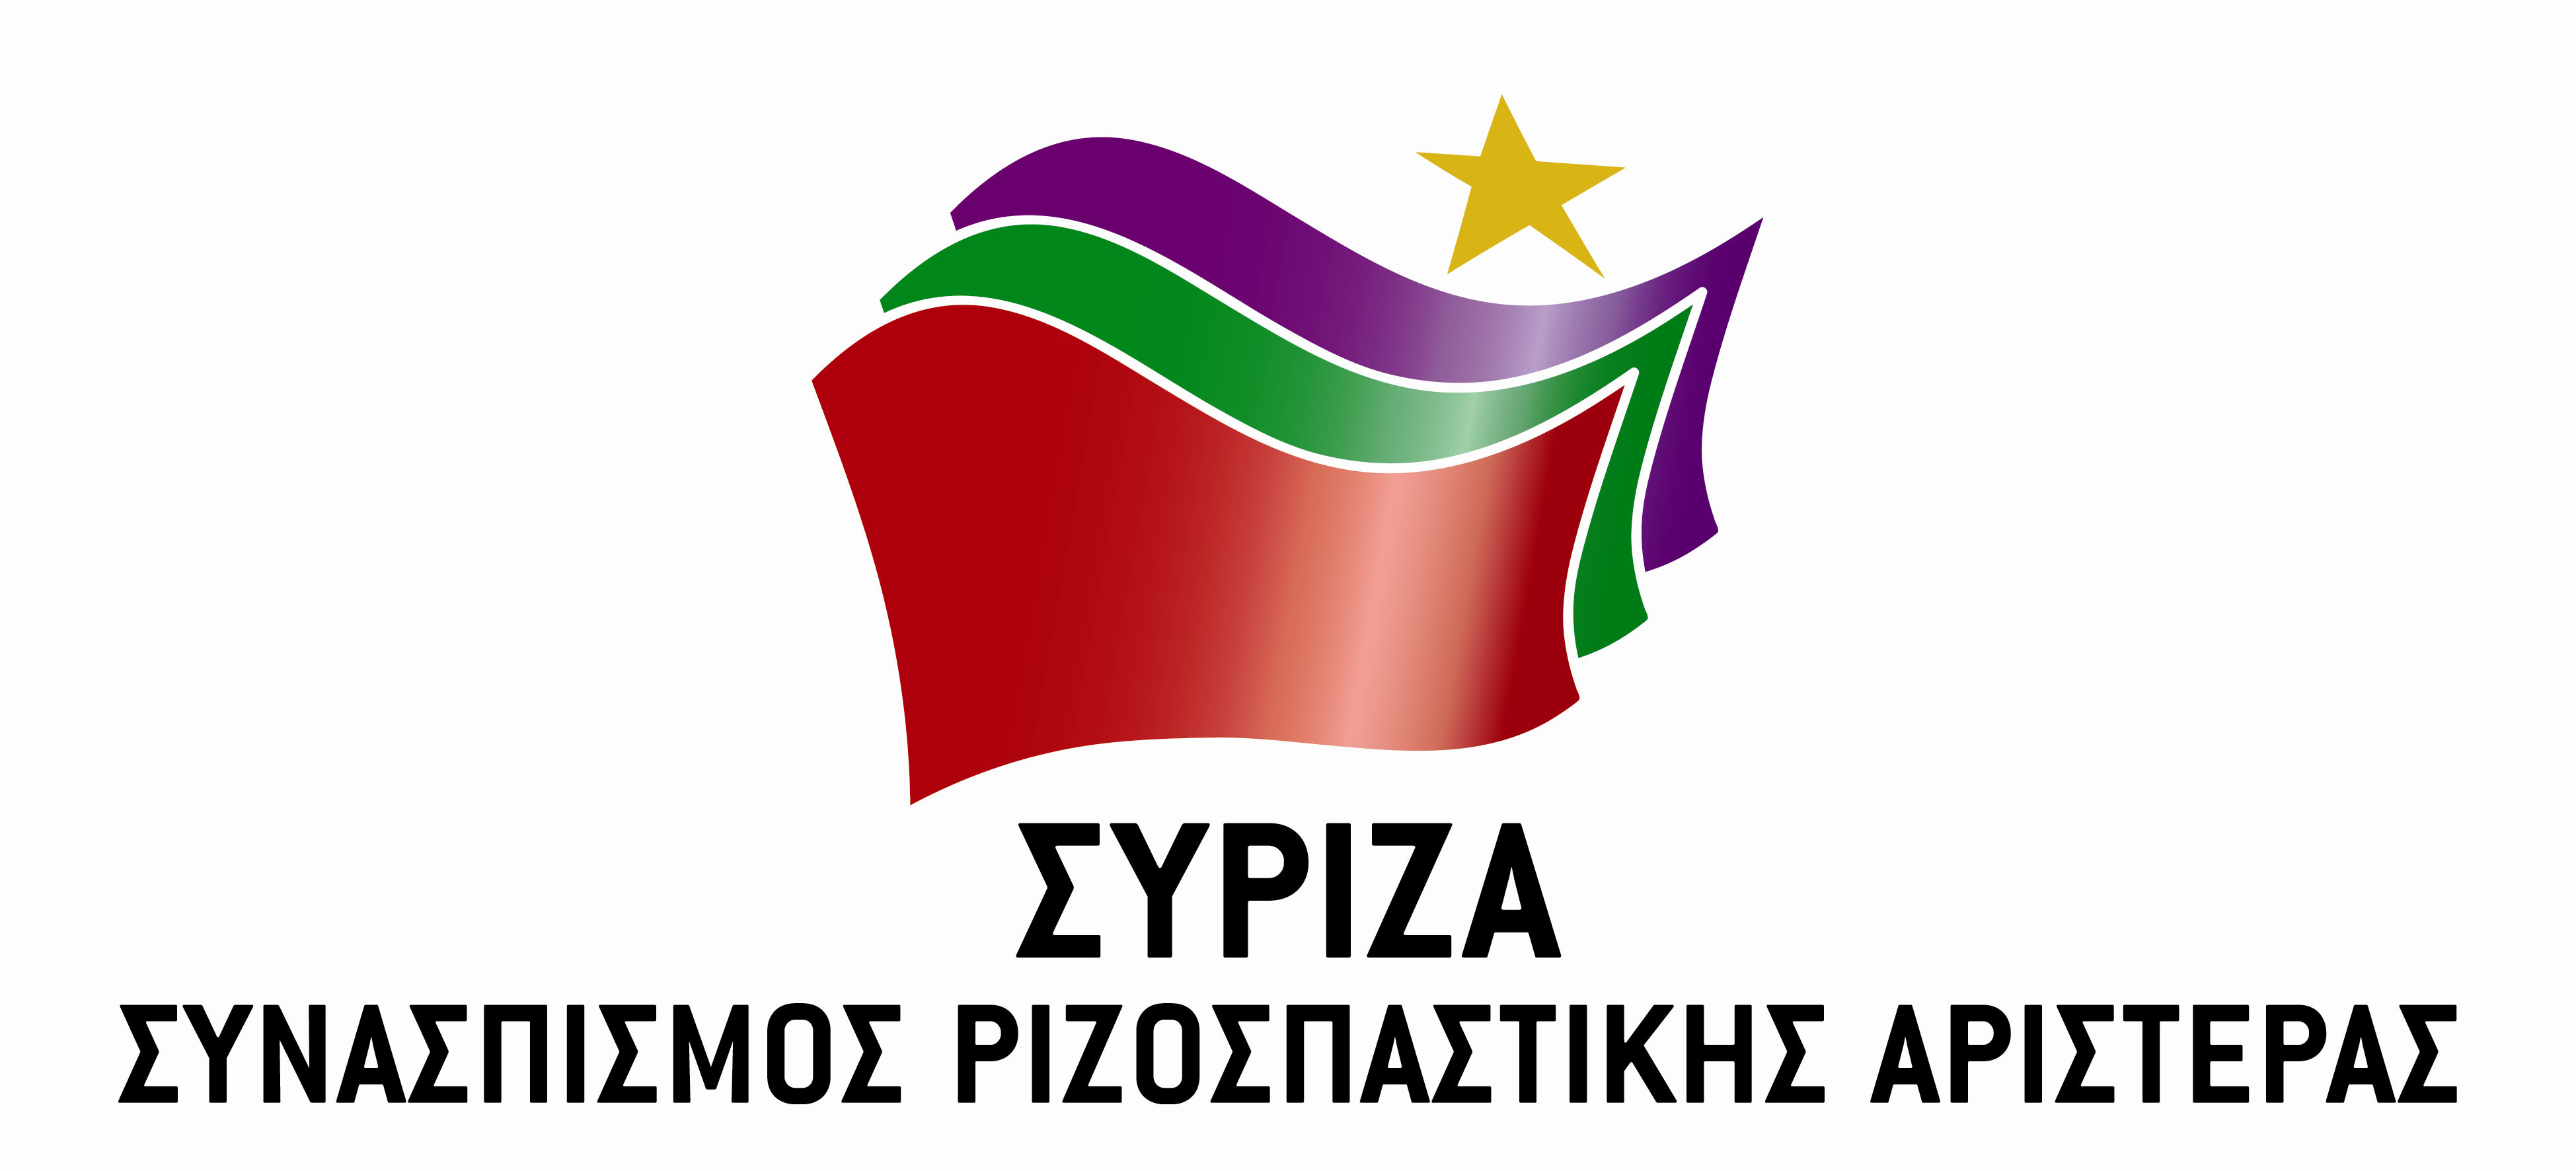 http://www.syriza.gr/logos/logo_syriza.jpg